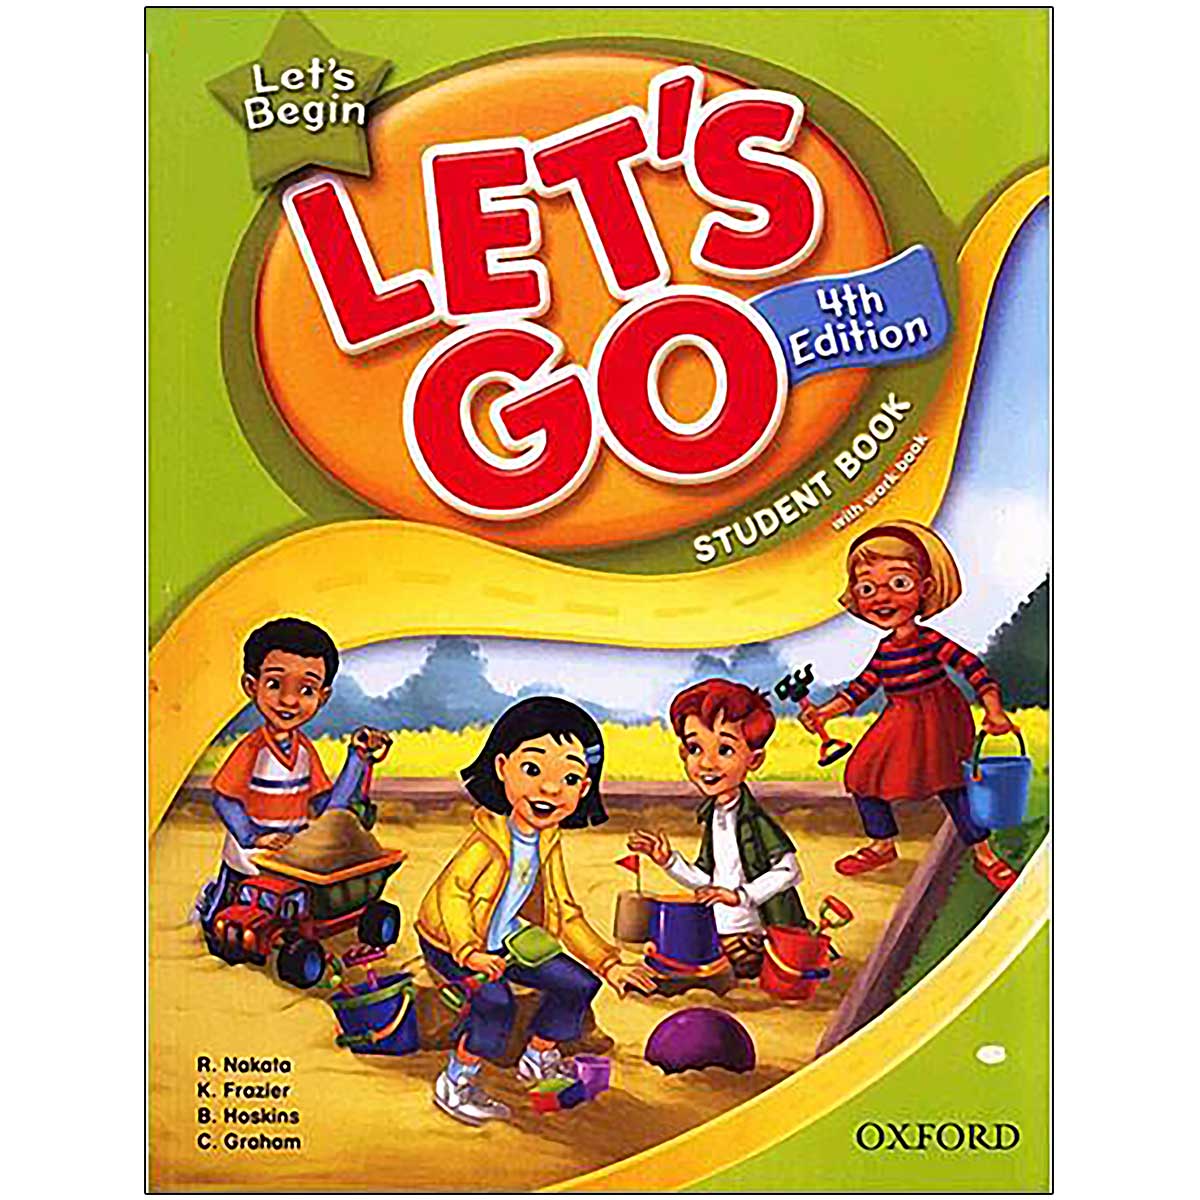 Let s cover. Книга Lets go. English for children книга. Книга для английского языка Oxford. Книги Lets go Oxford.